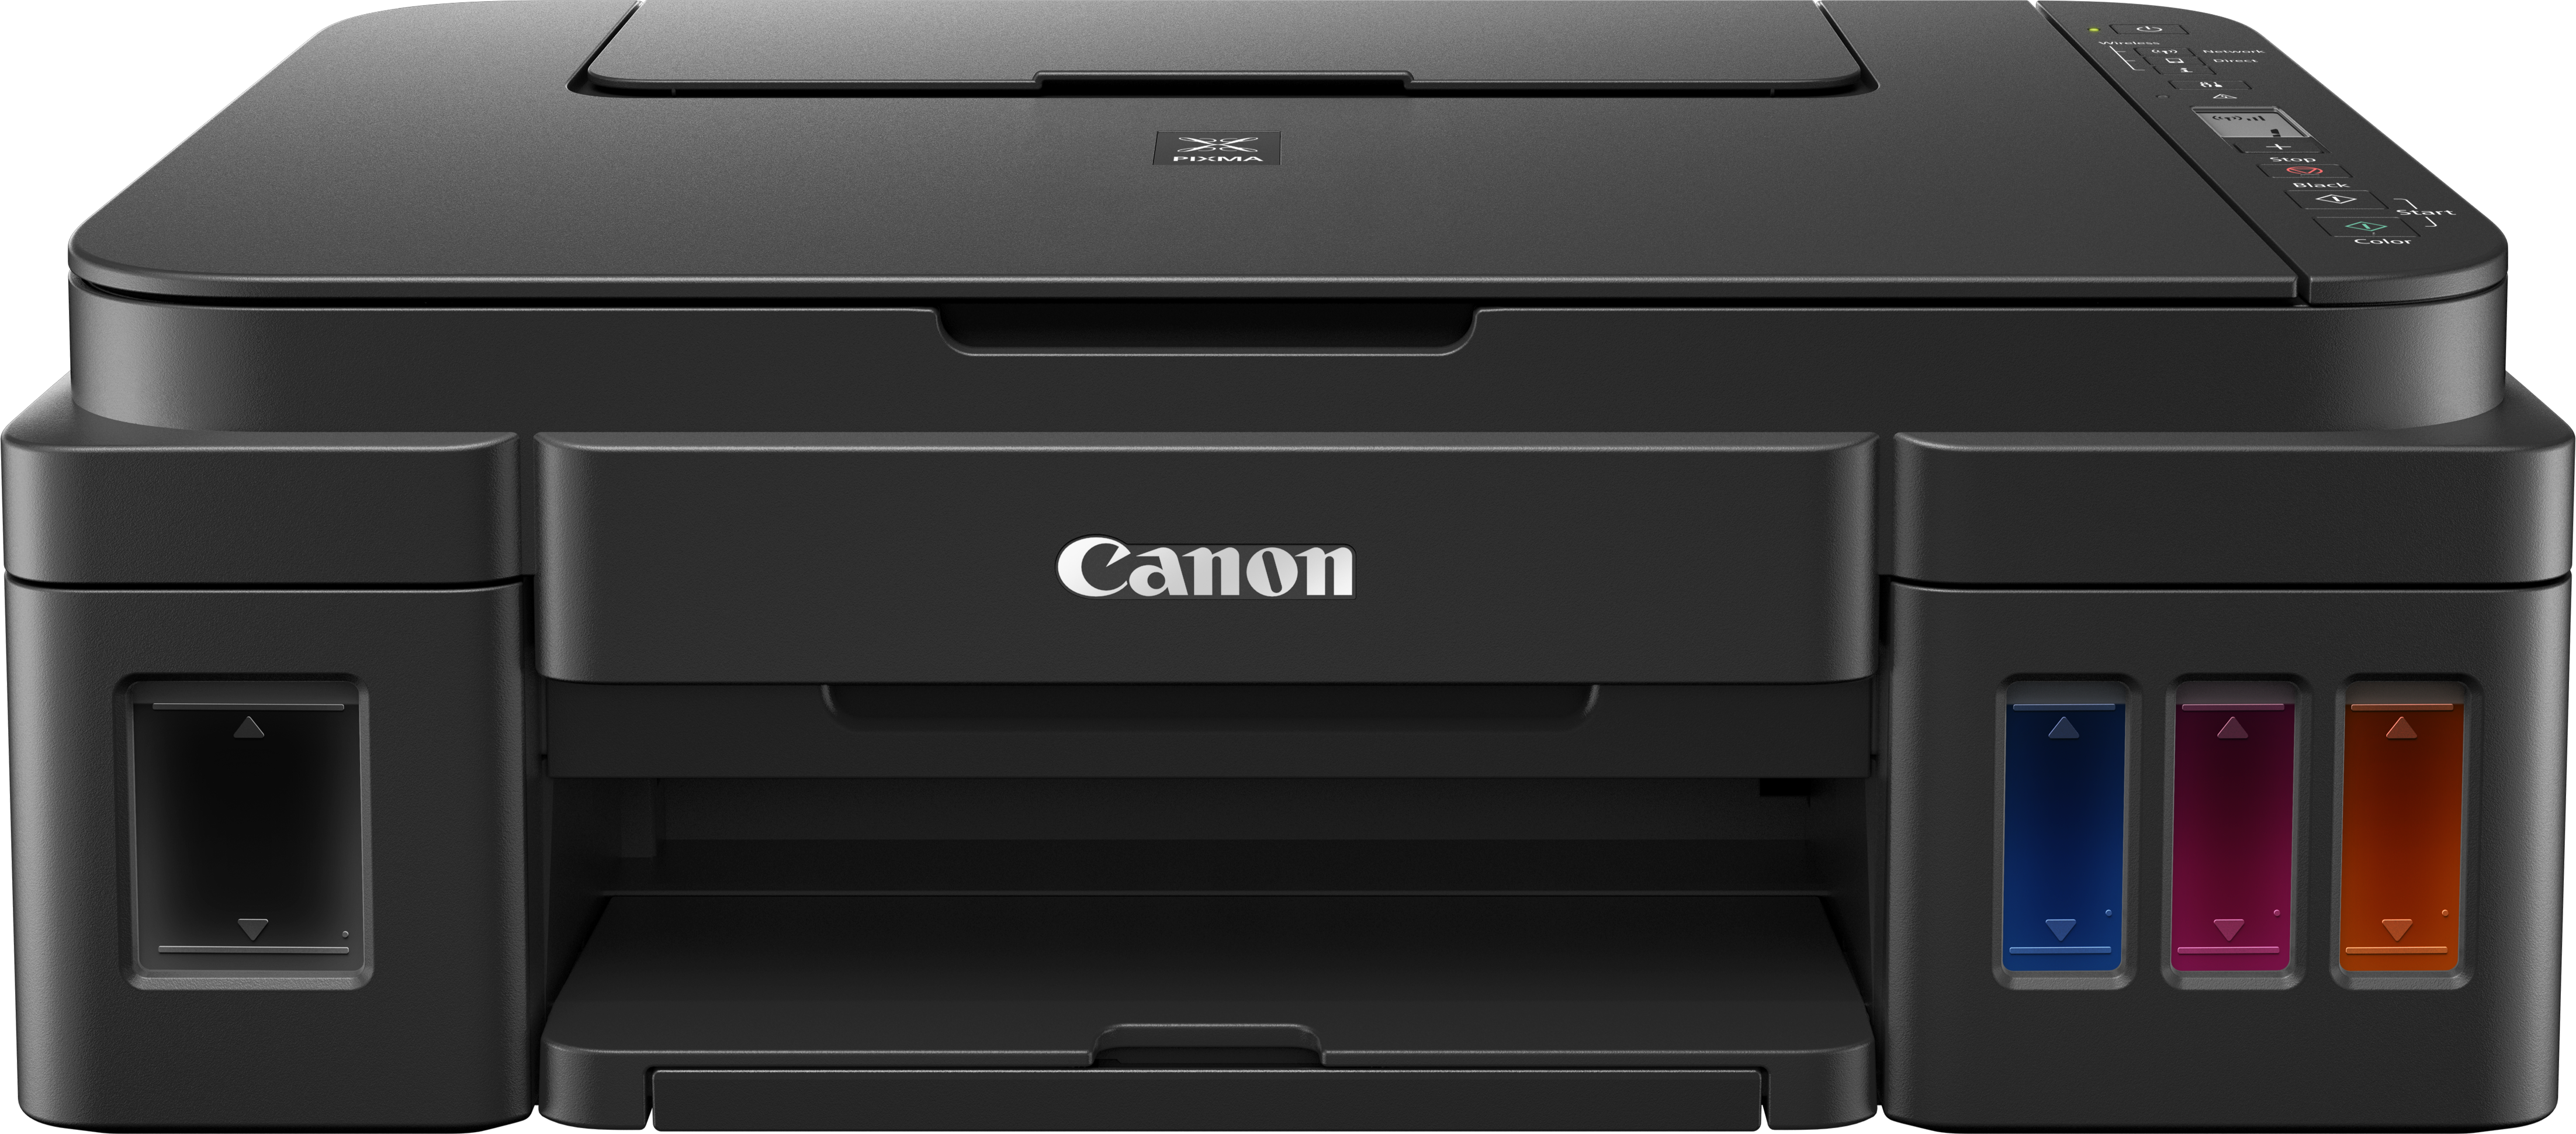 Принтер canon g. Canon PIXMA 2007 года. МФУ Canon PIXMA g2415. Canon PIXMA g3411. Canon PIXMA g1400, цветн., a4.